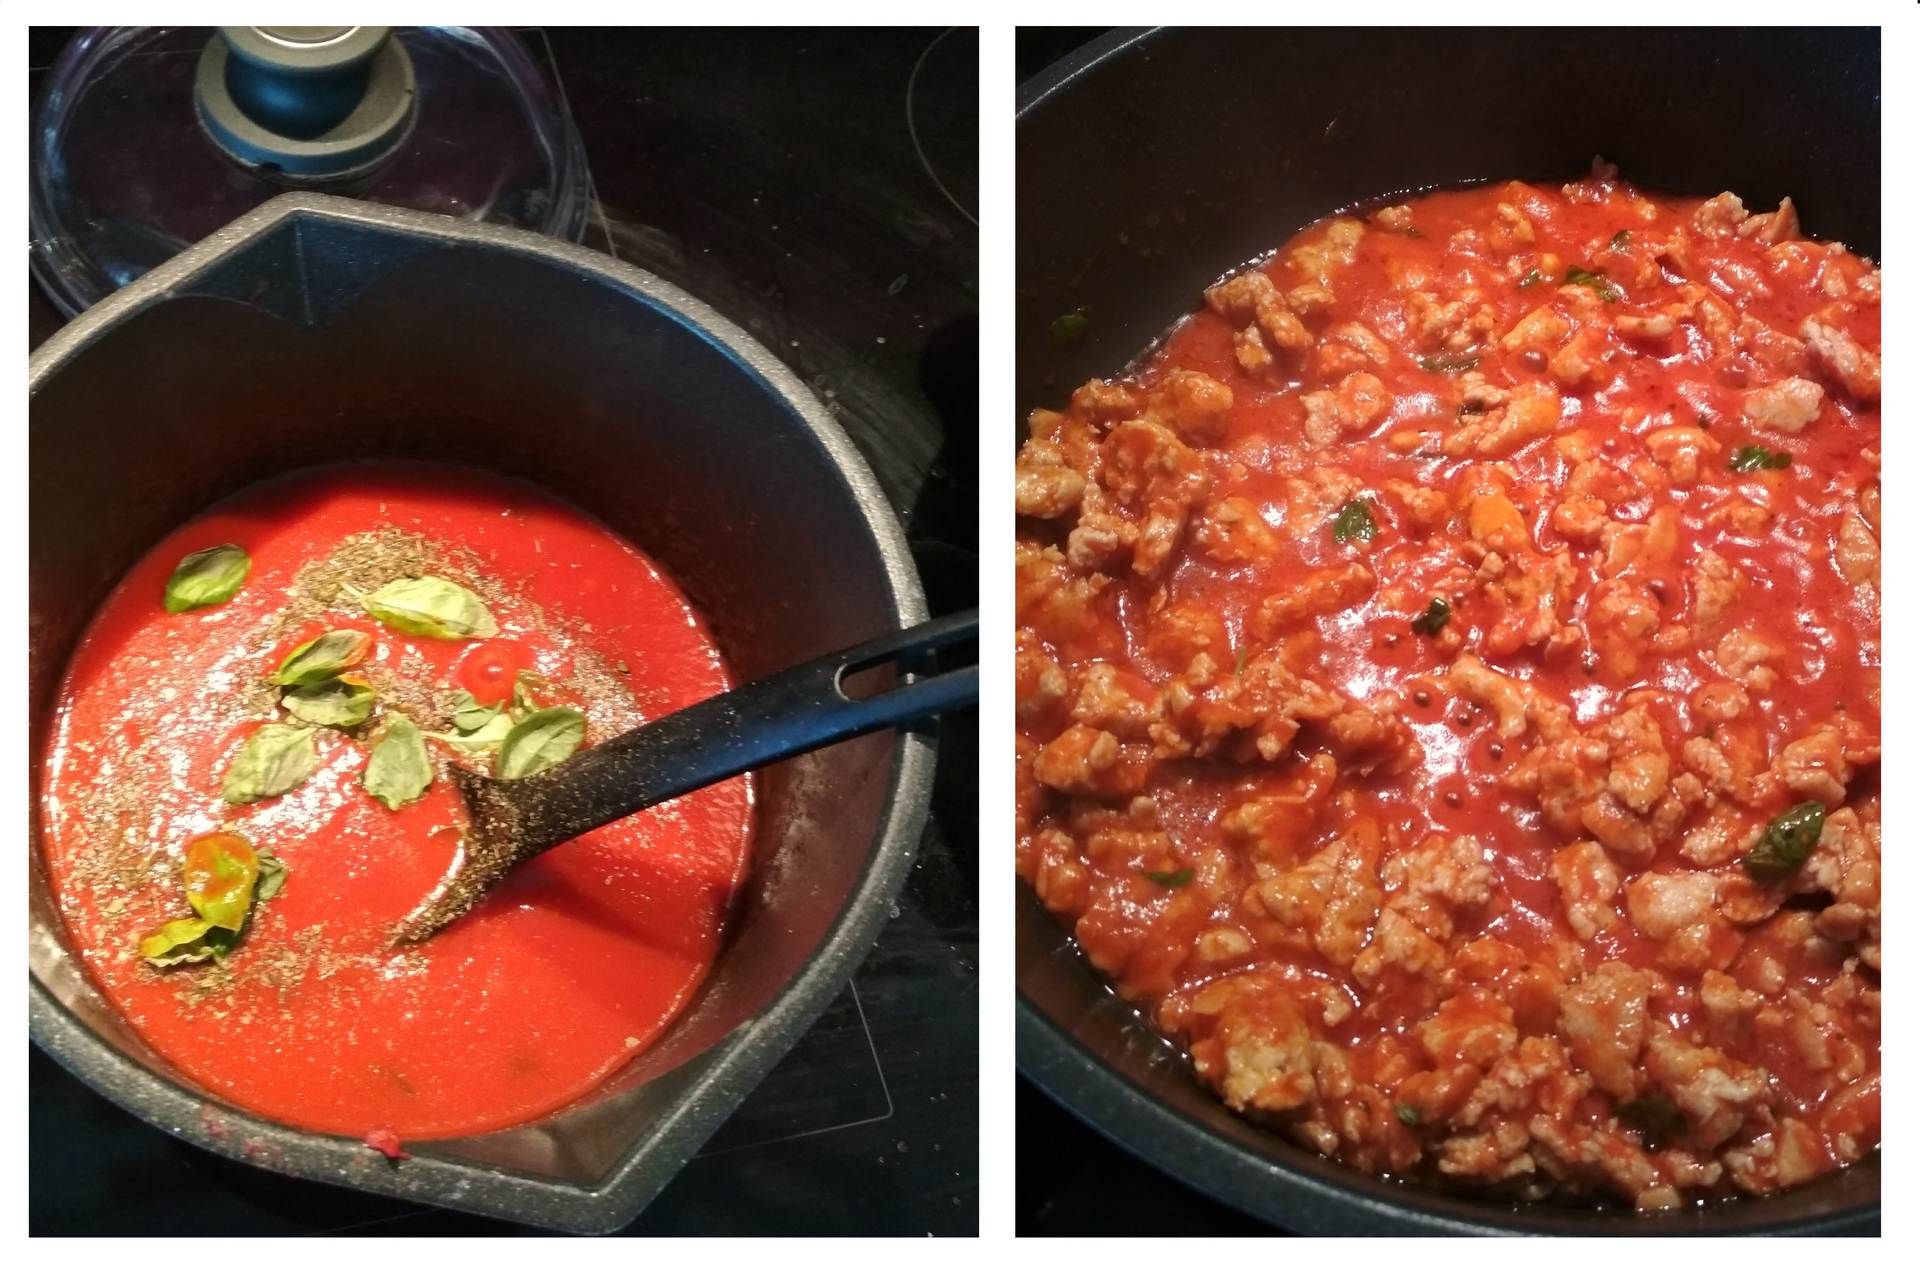 pomidorowy sos do spaghetti